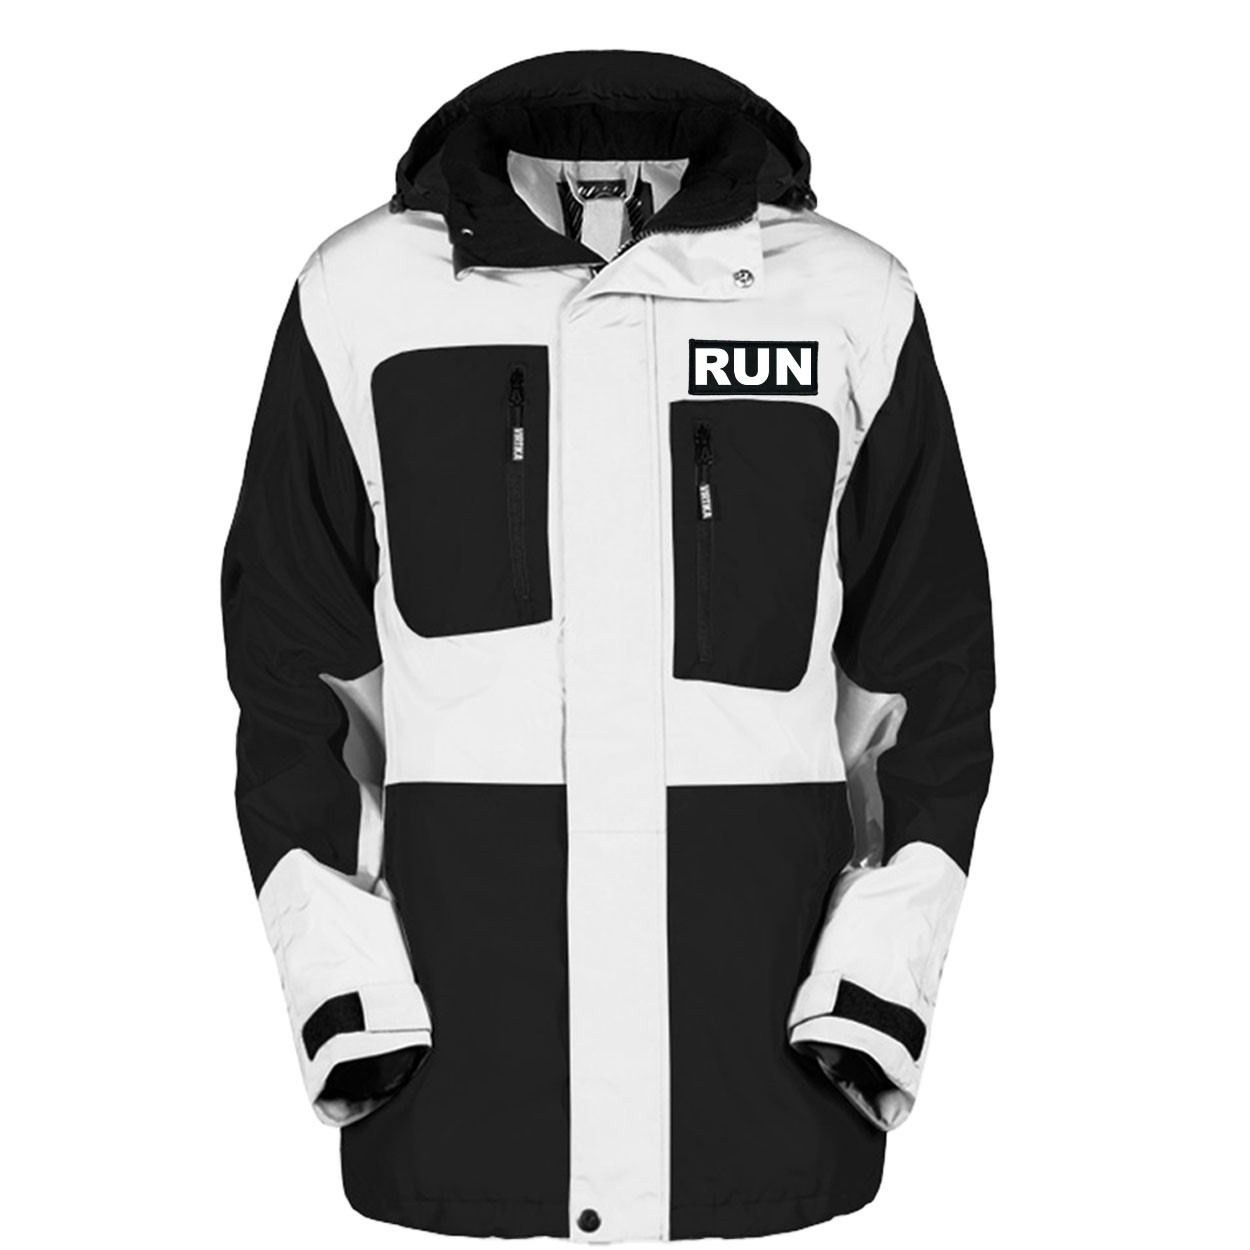 Run Brand Logo Pro Waterproof Breathable Winter Virtika Jacket Black/White (White Logo)